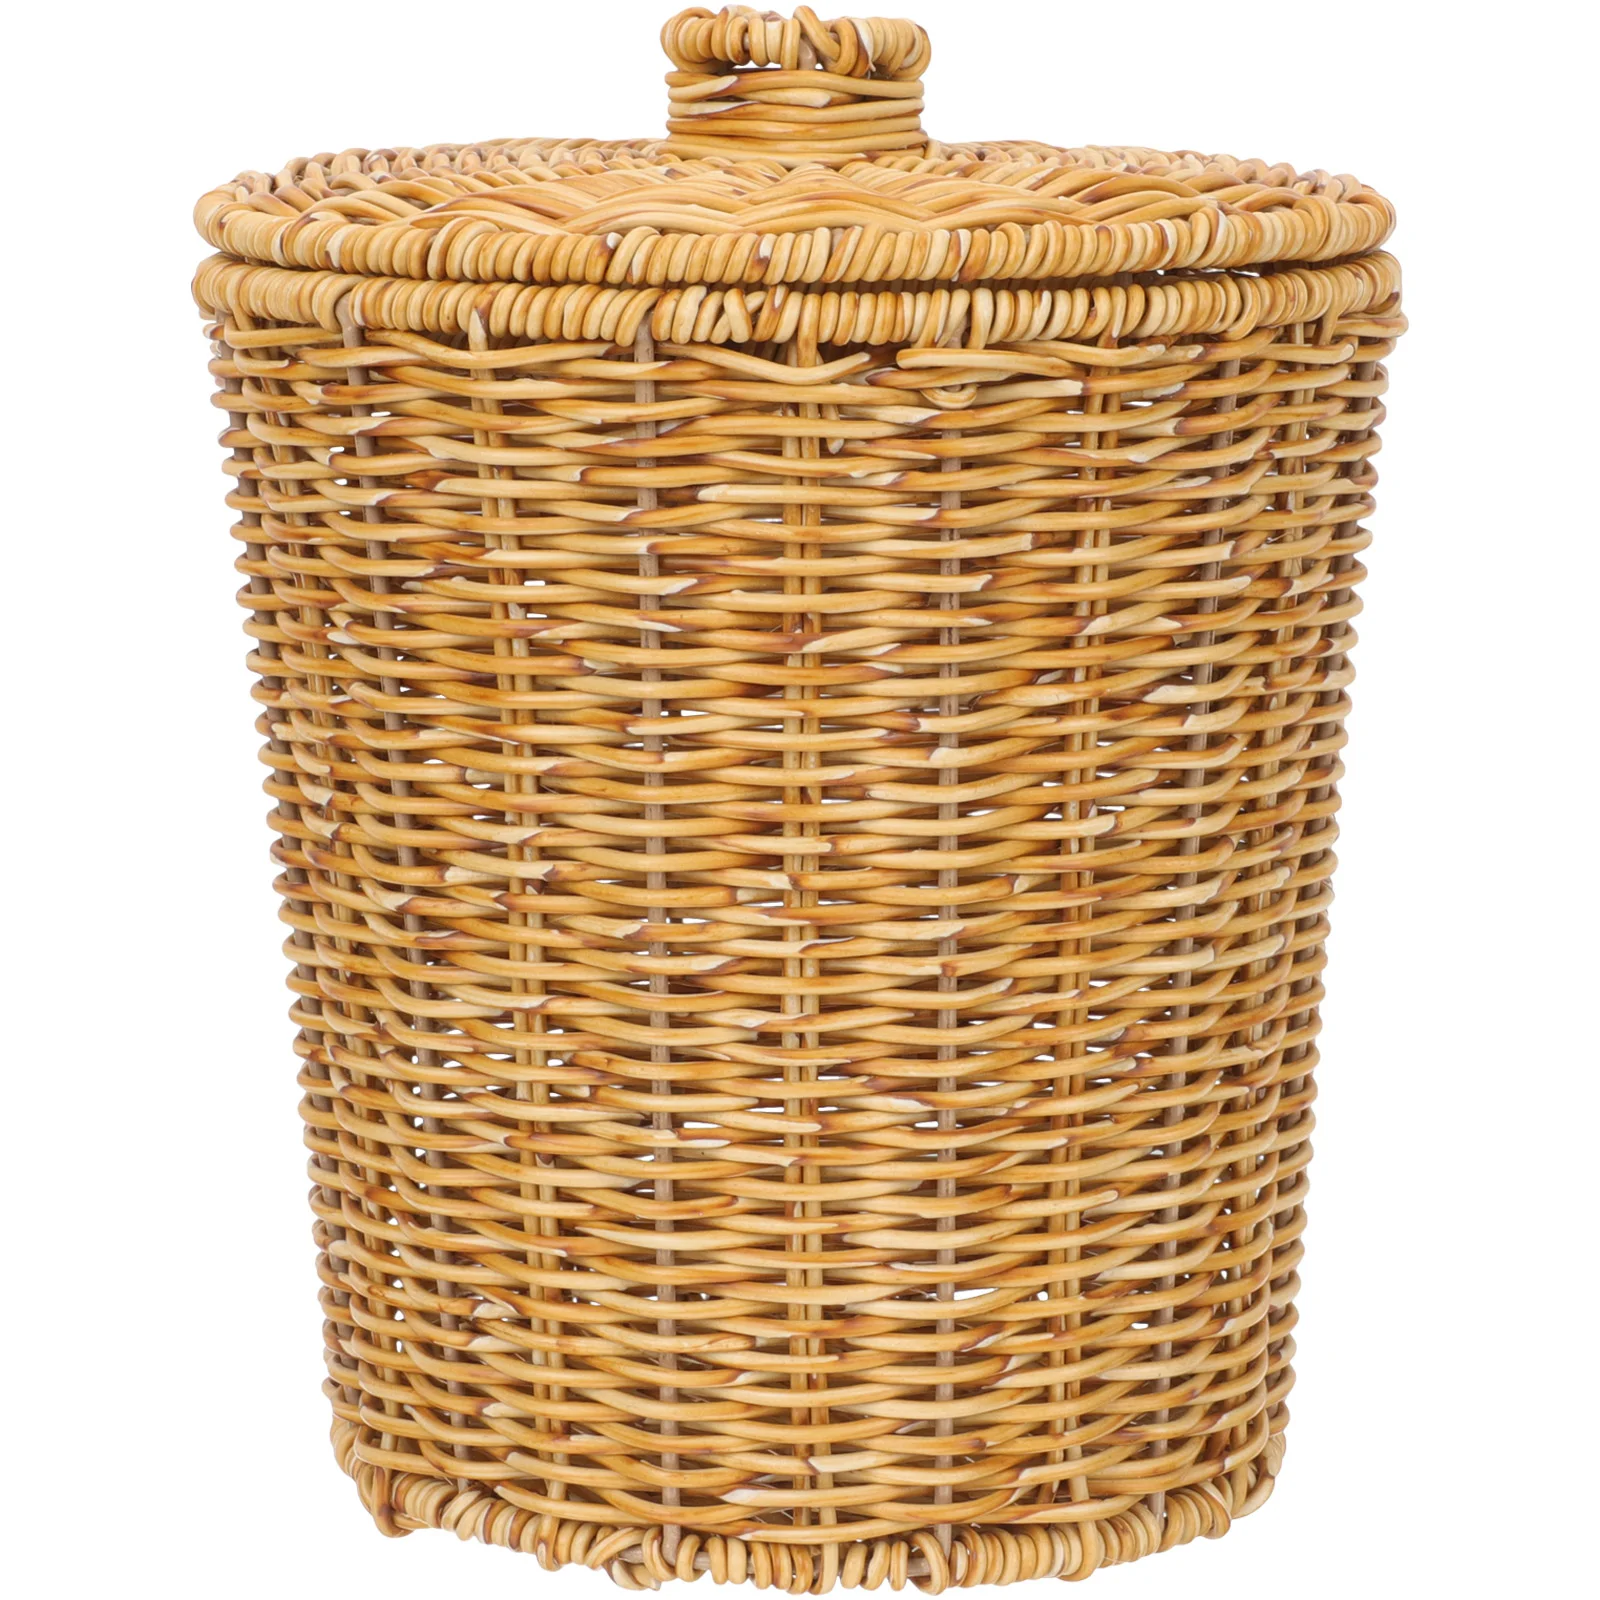 

Basket Woven Can Trash Rattan Waste Wicker Storage Laundry Garbage Flower Bedroom Hamper Baskets Bin Lid Seagrass Round Bins Pot